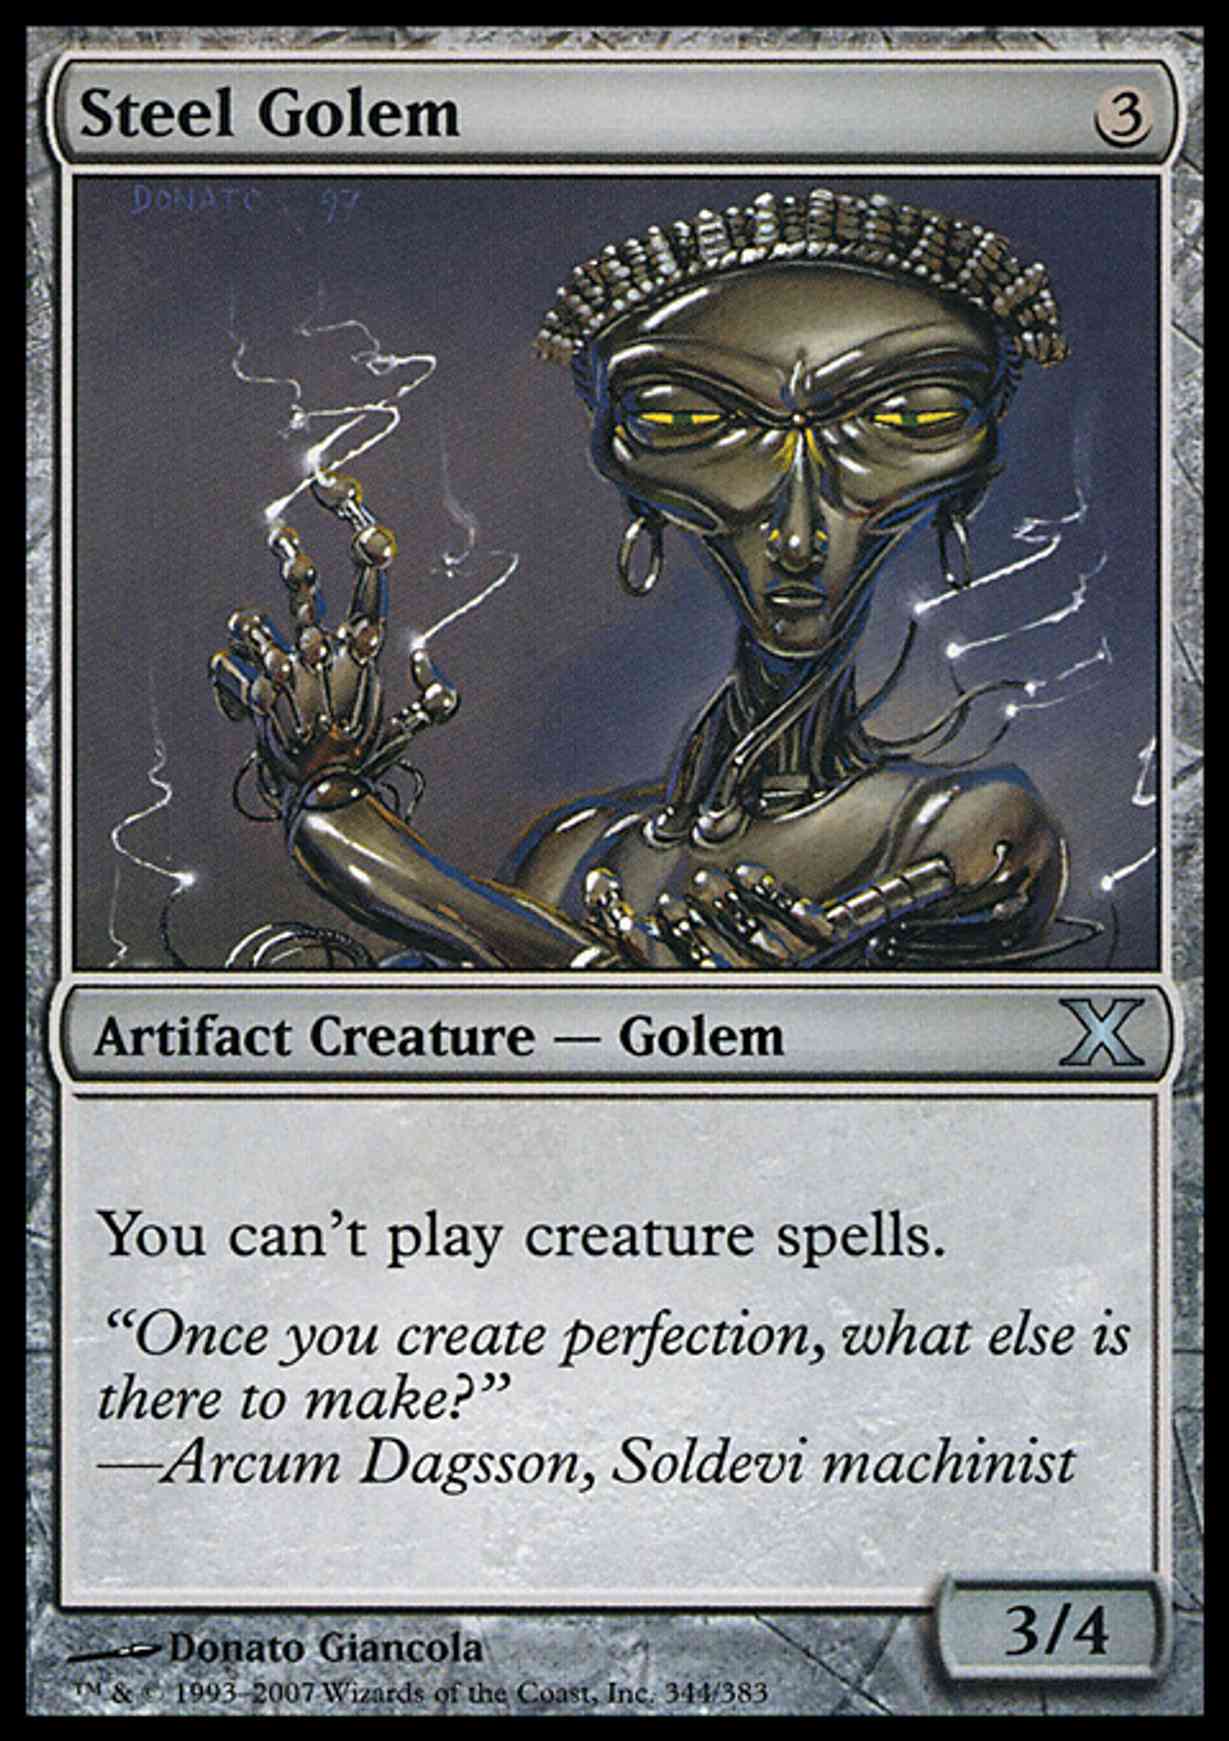 Steel Golem magic card front